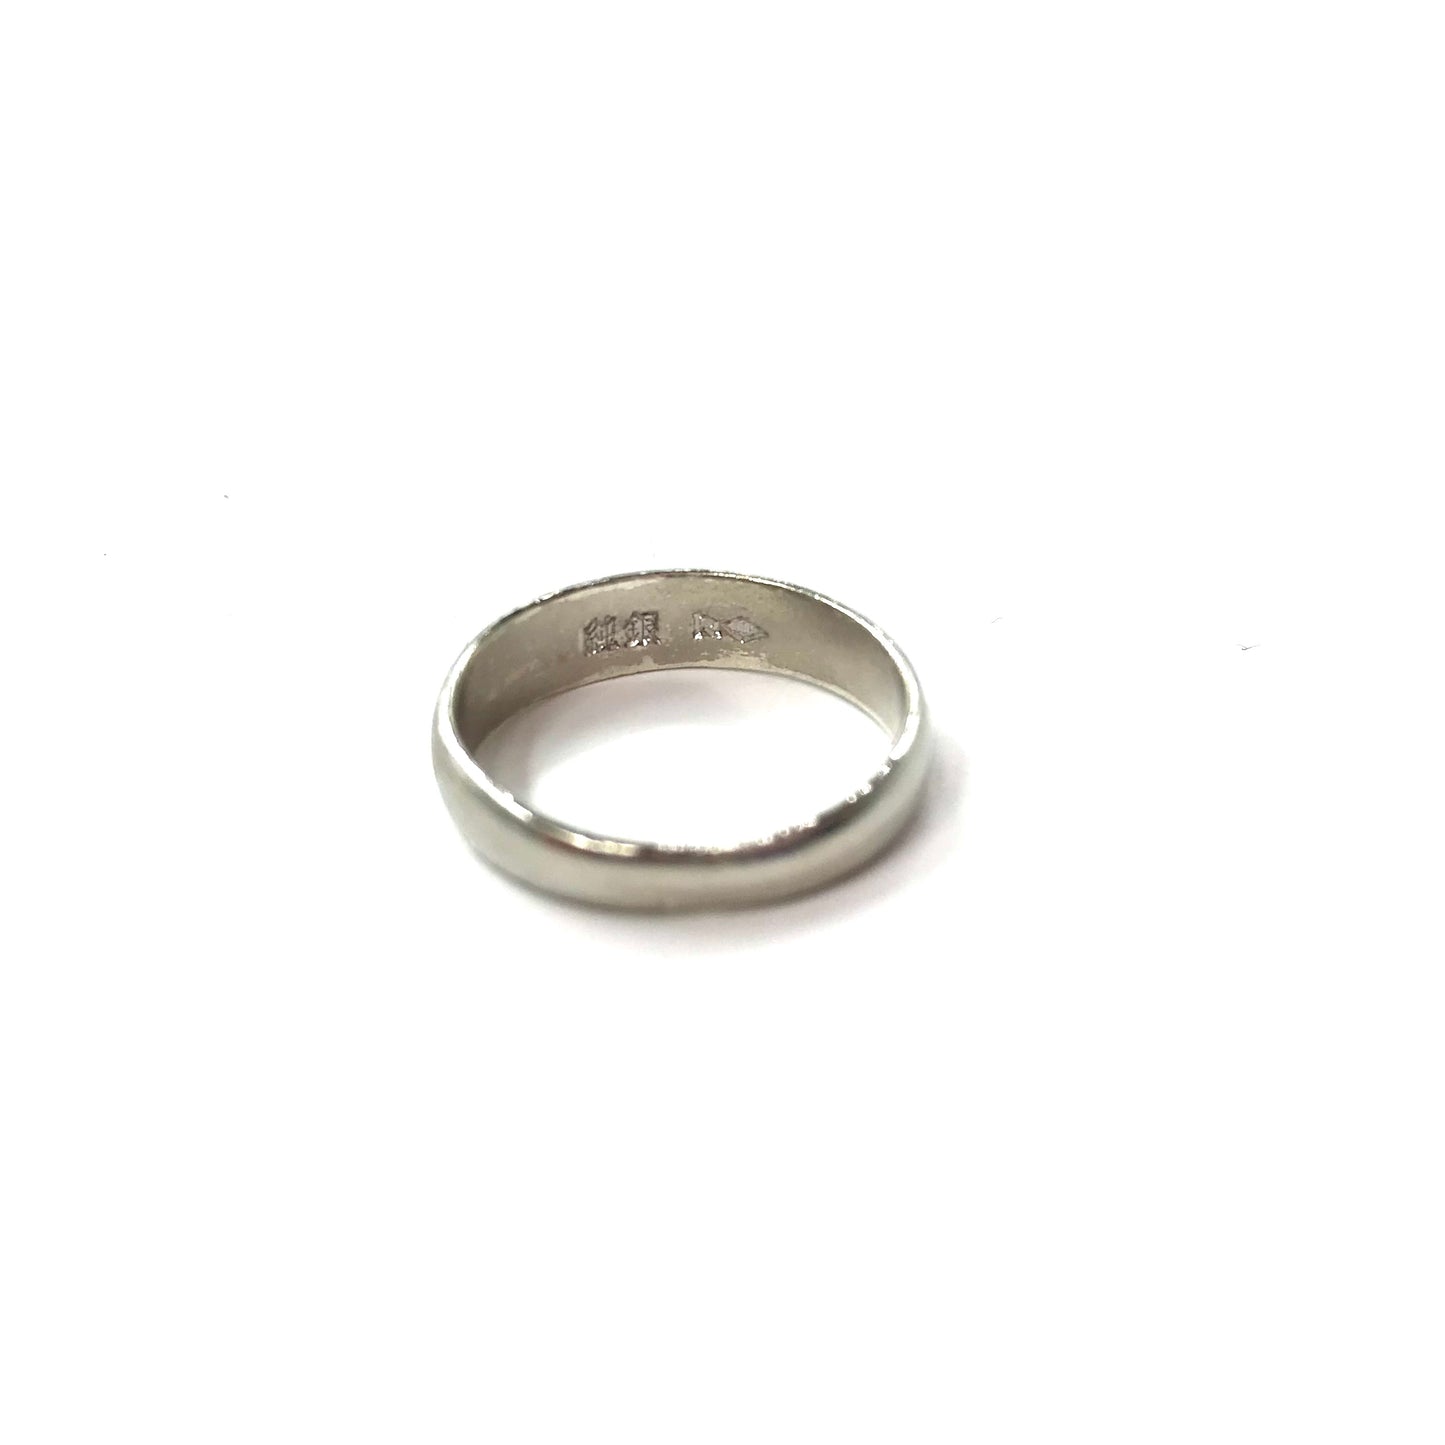 Vintage Japanese Silver Ring シルバーリング 指輪 15号 純銀 SILVER1000 菊紋章 天皇 奉祝御金婚 御在位50年